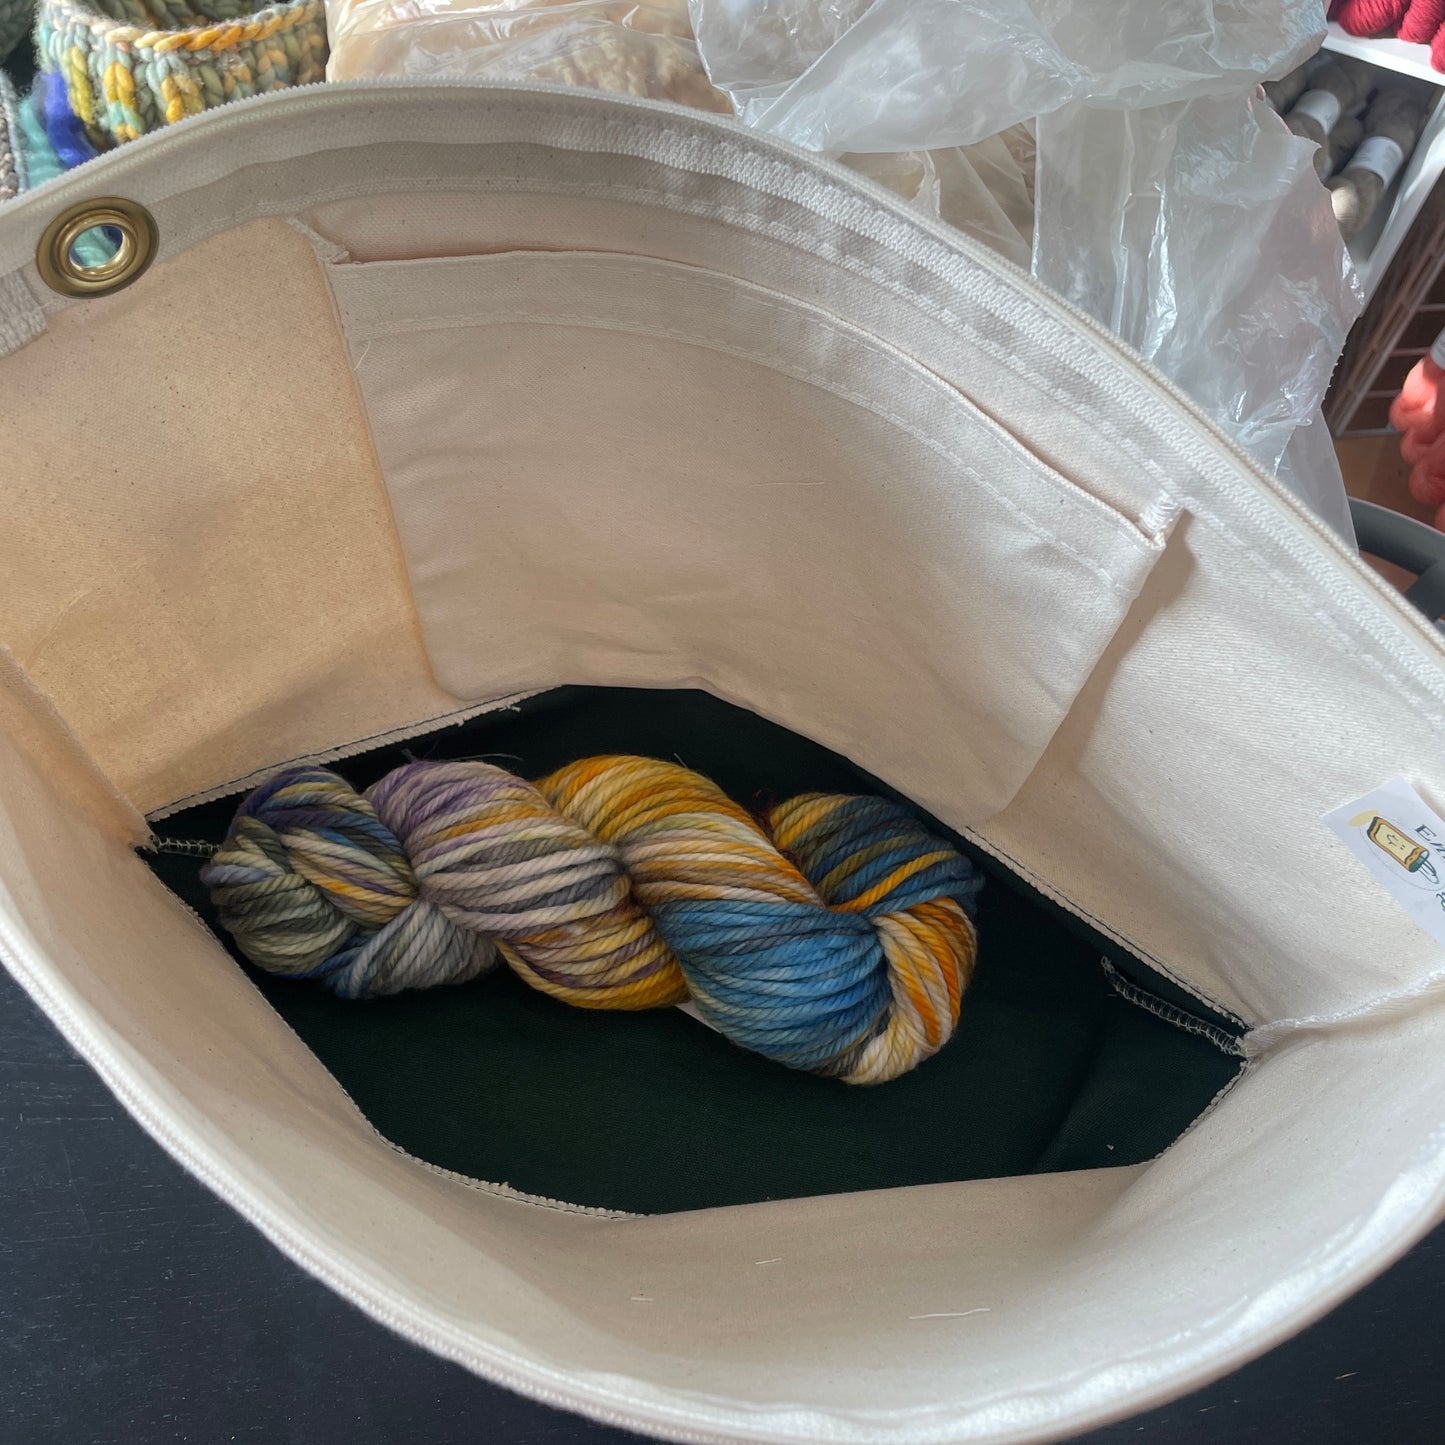 Maine Yarn & Fiber Supply's Crossbody Canvas Flat Bottom Project Bag!